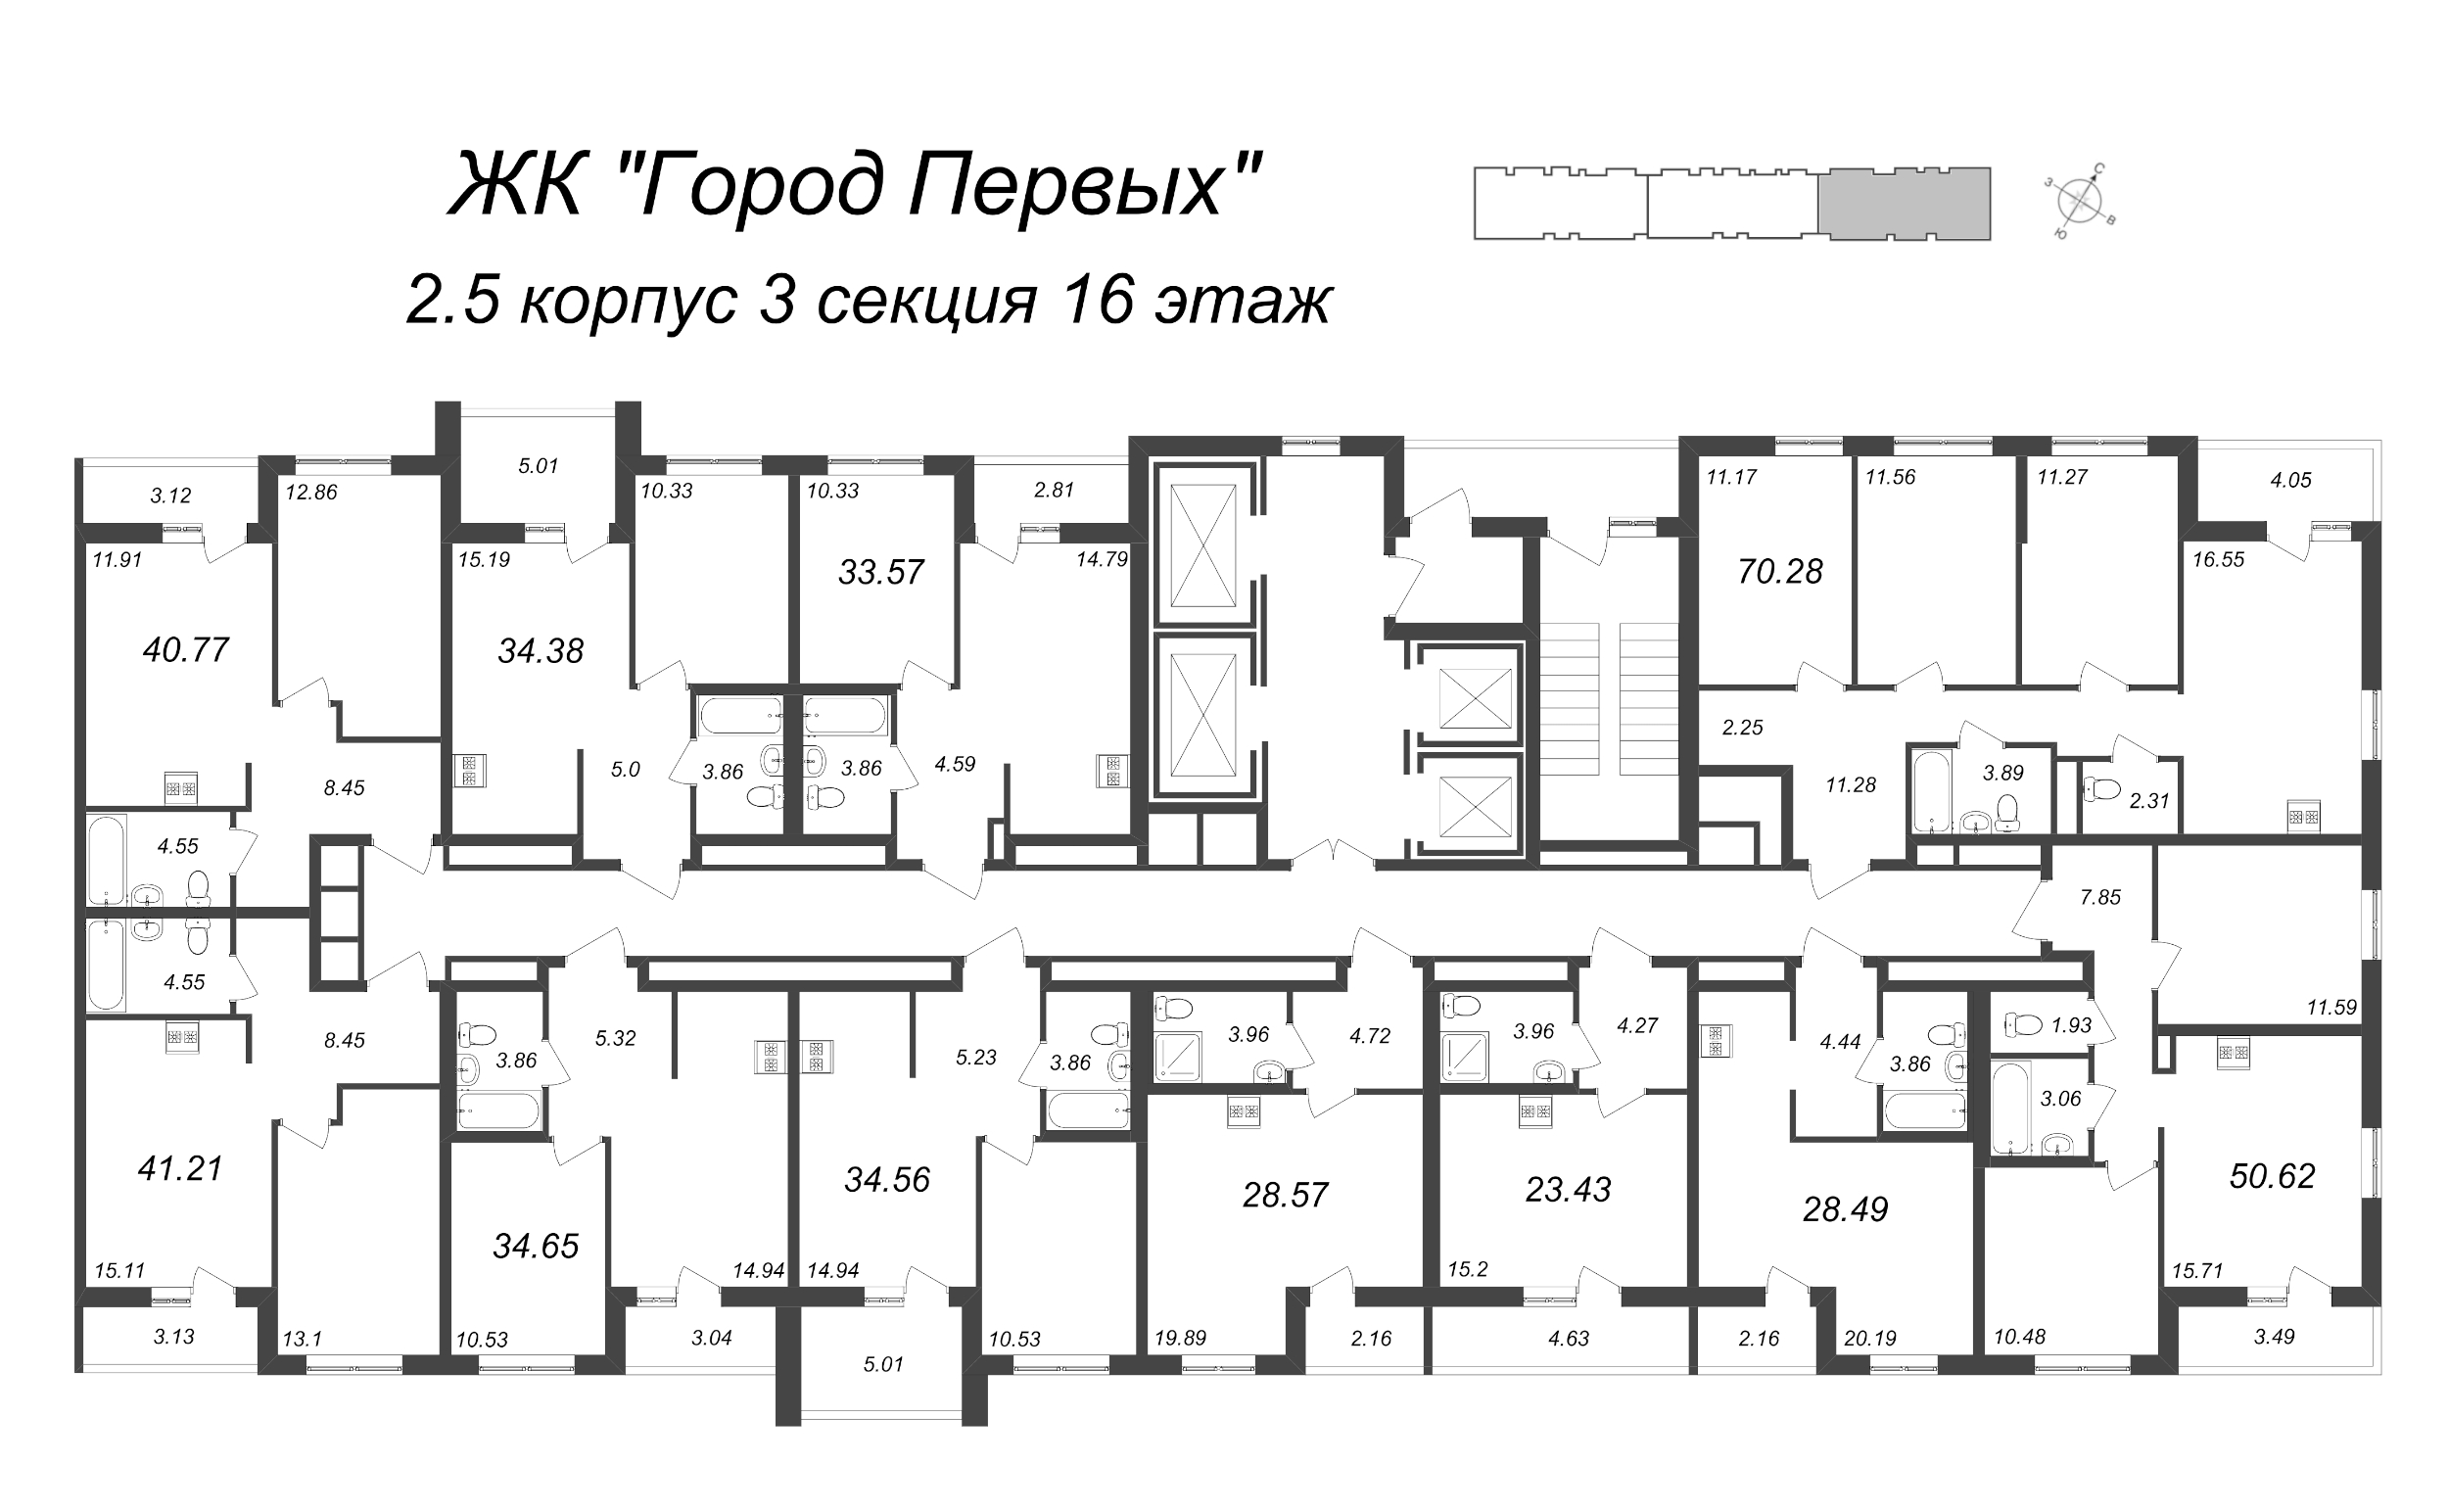 4-комнатная (Евро) квартира, 65.75 м² - планировка этажа